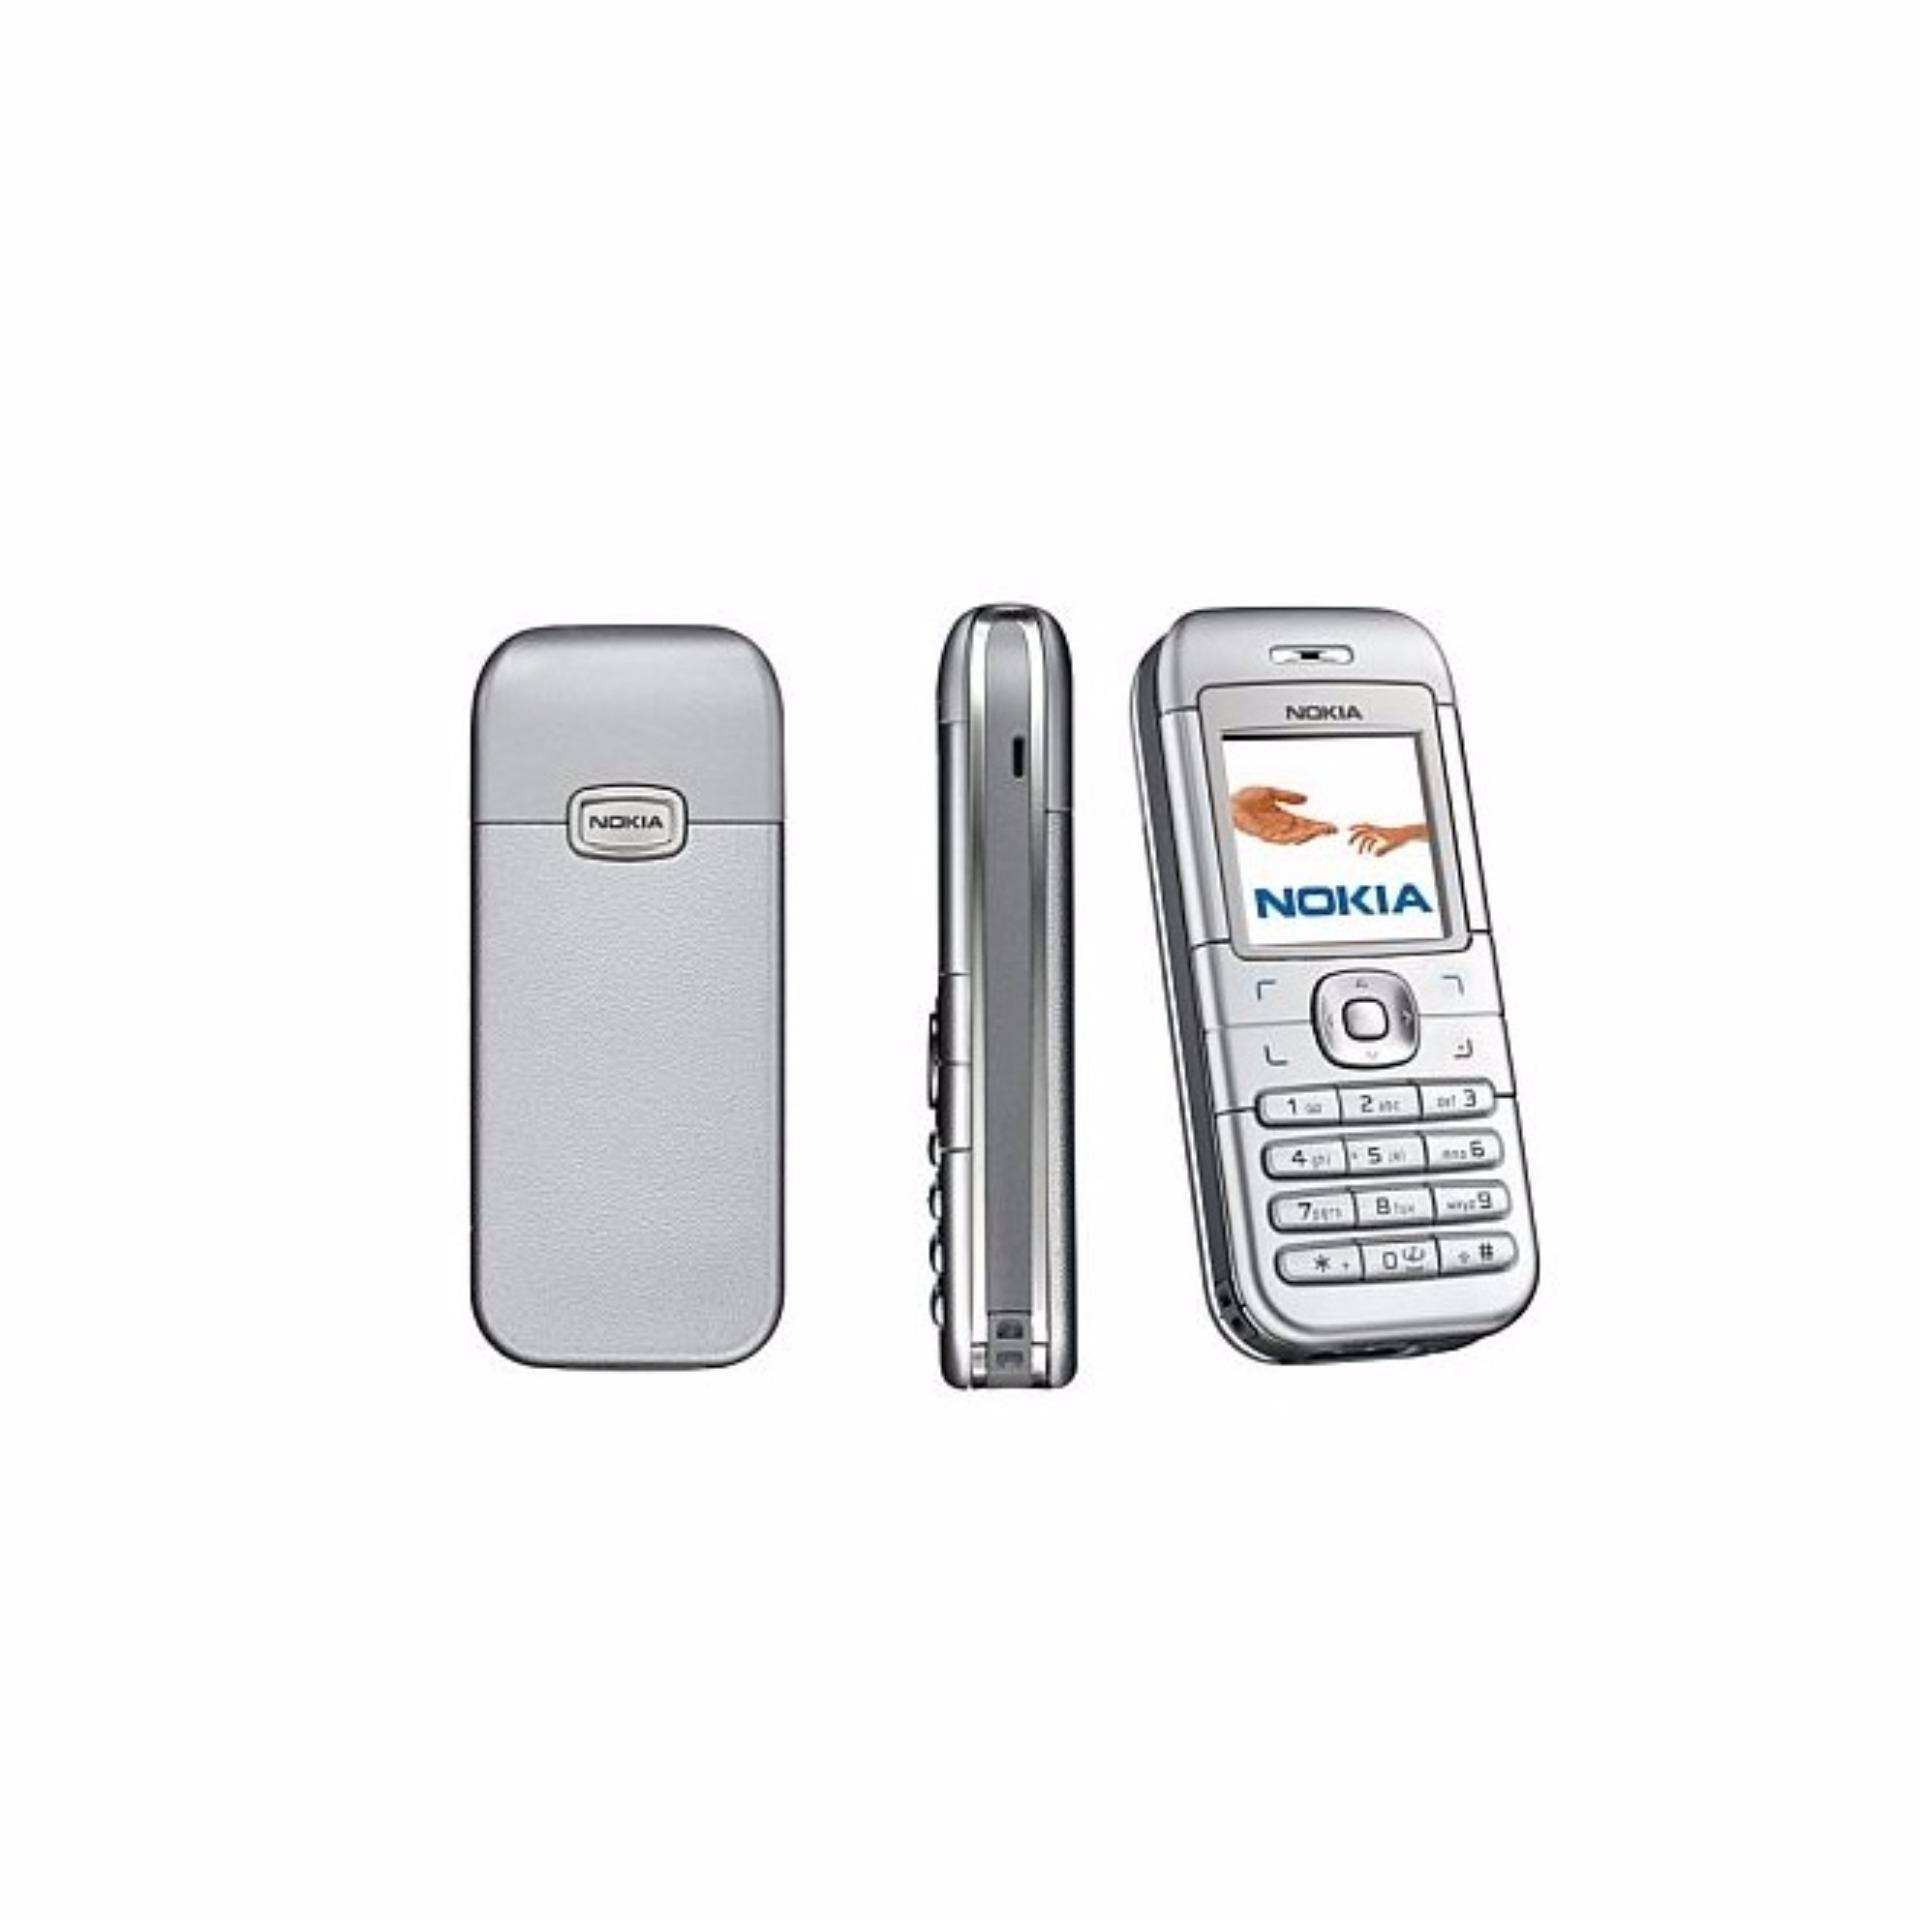 Handphone Nokia 6030 - Silver